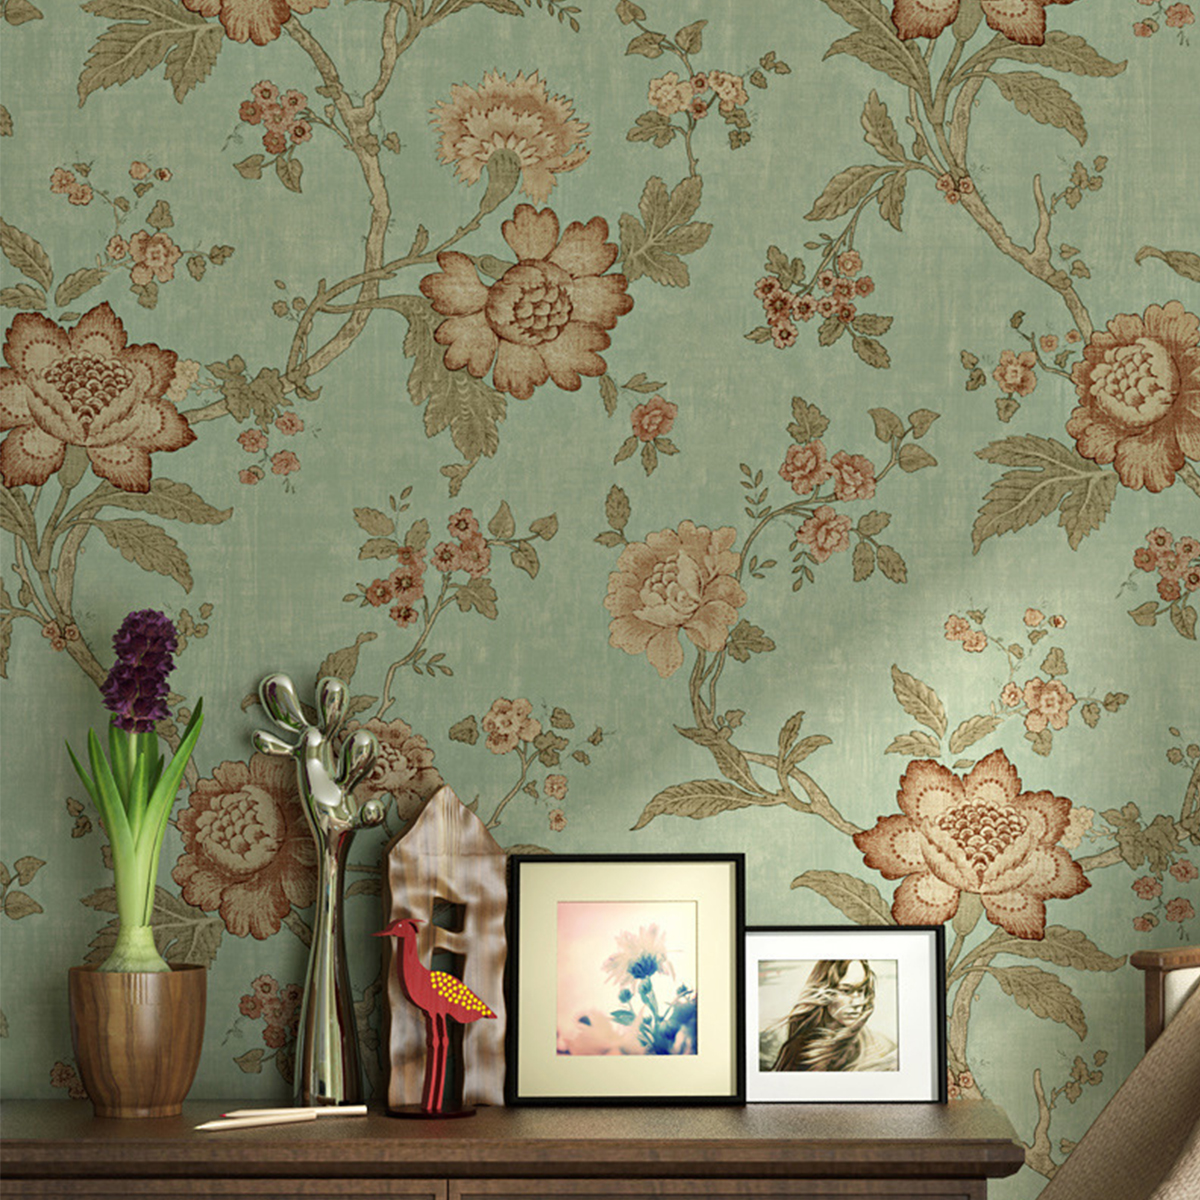 10m53cm-Self-Adhesive-Wall-Tile-Sticker-Living-Room-Home-Decor-2-Type-Art-Decoration-1814021-2